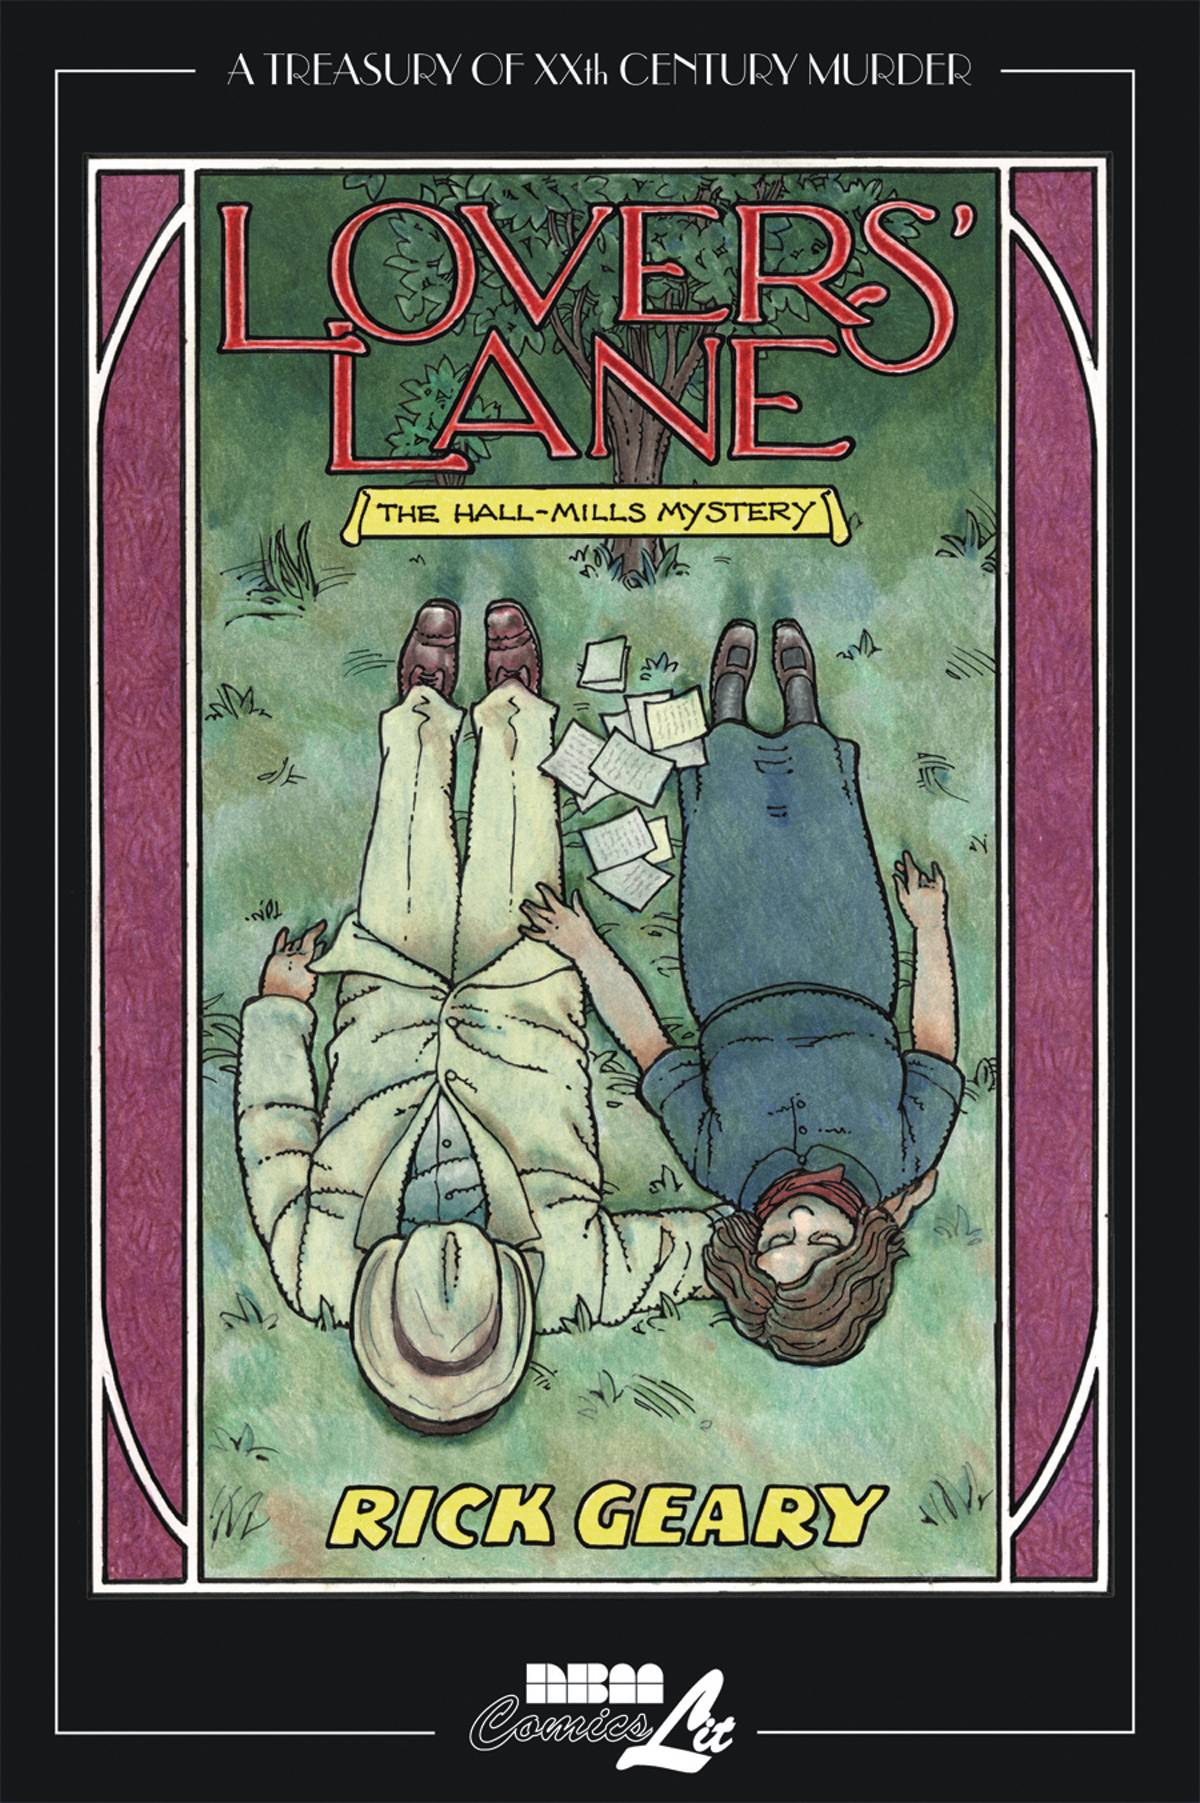 Treasury 20th Century Murder Hardcover Volume 5 Lovers Lane